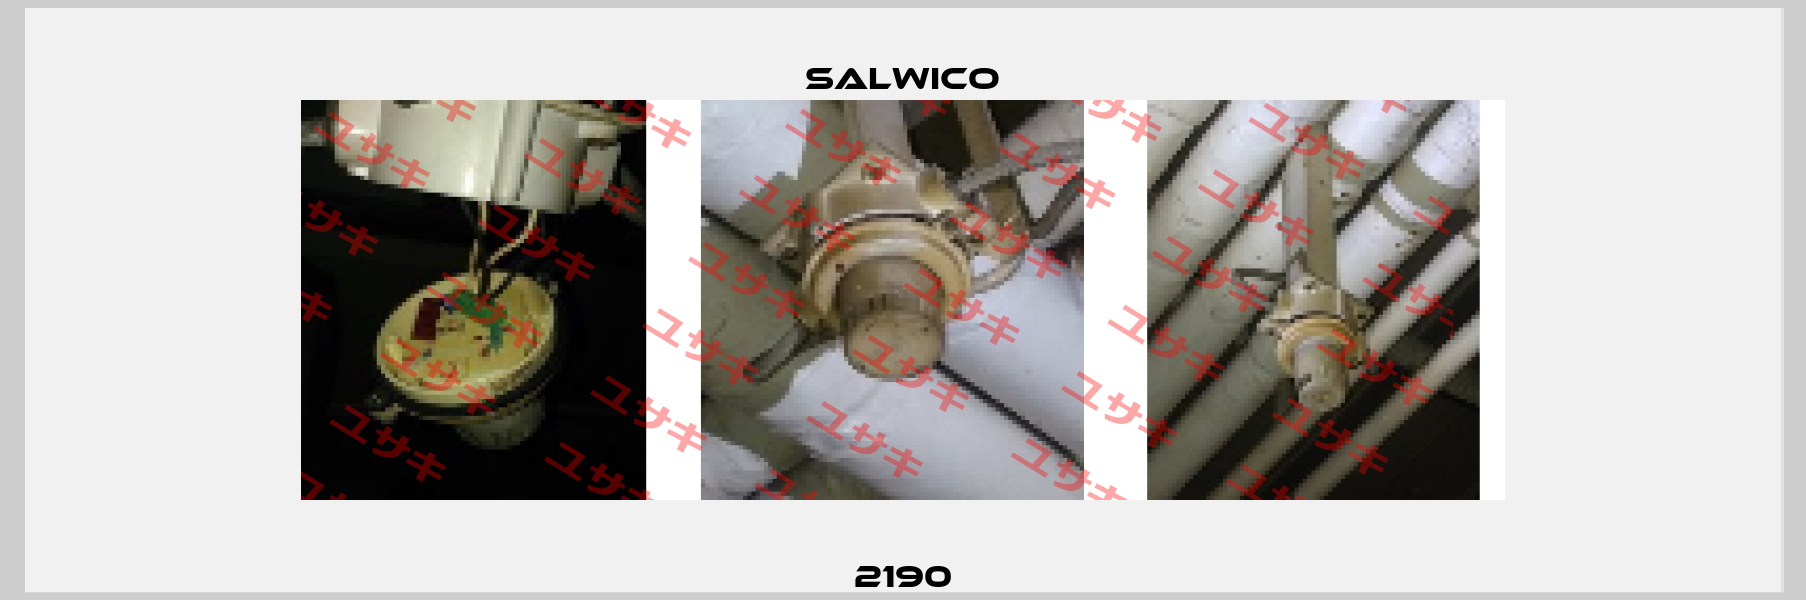 2190 Salwico